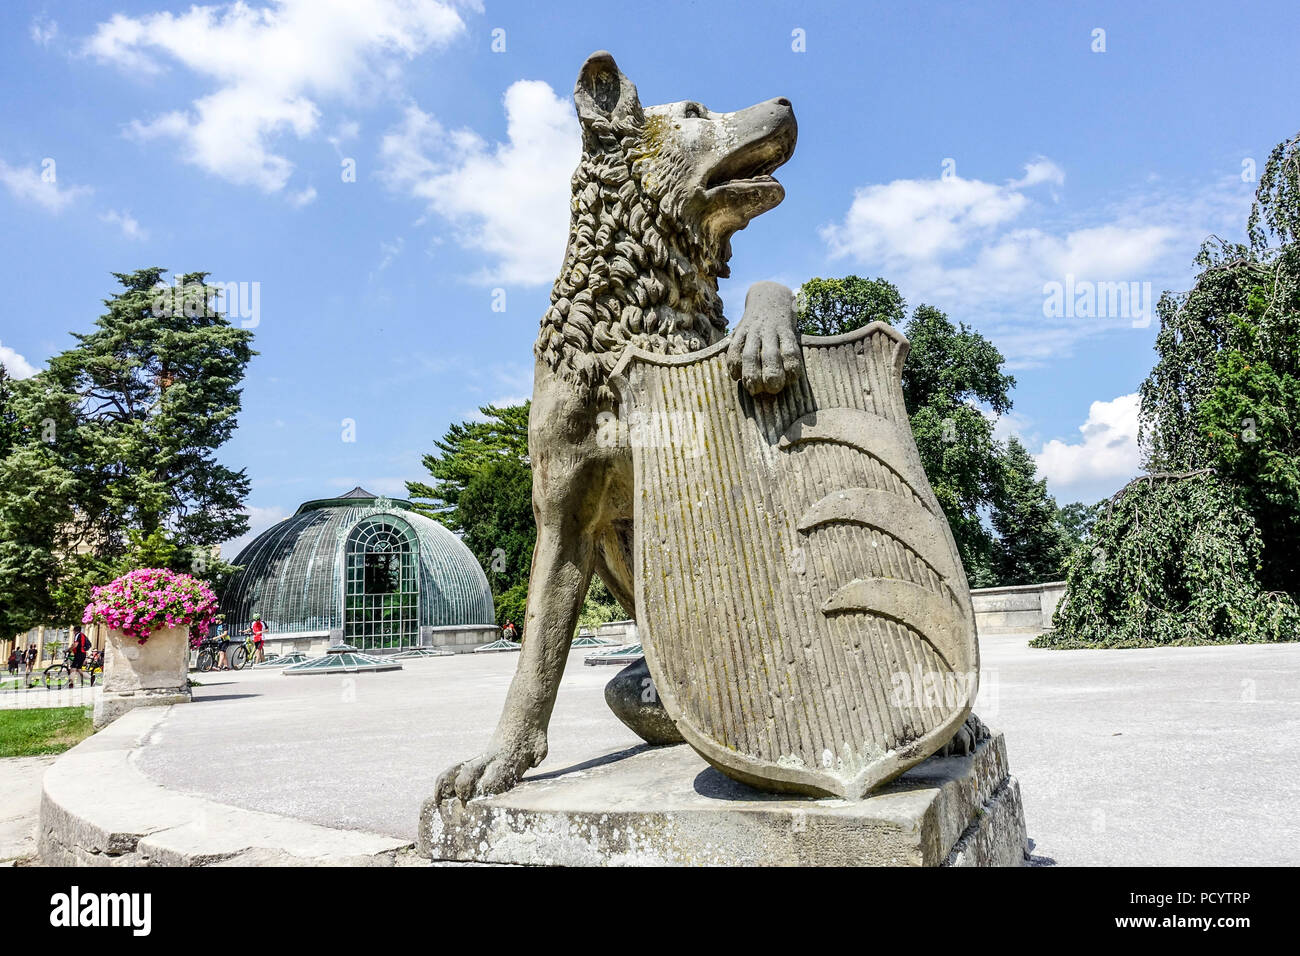 Lednice Castle Garden with sculpture, South Moravia, Czech Republic, Europe Stock Photo